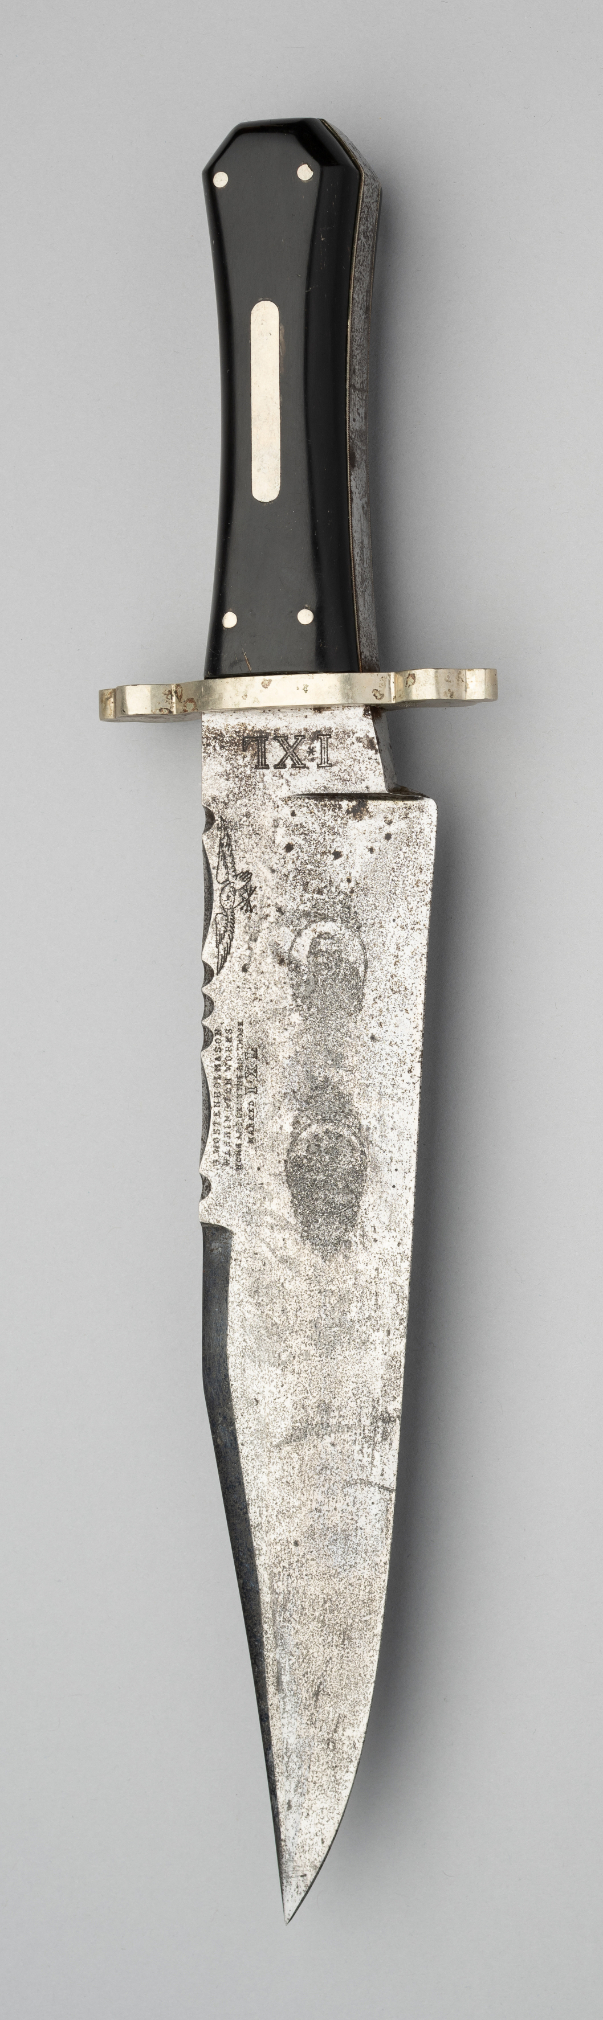 A BOWIE KNIFE, GEORGE WOSTENHOLM & SON, WASHINGTON WORKS, SHEFFIELD, 20TH CENTURY